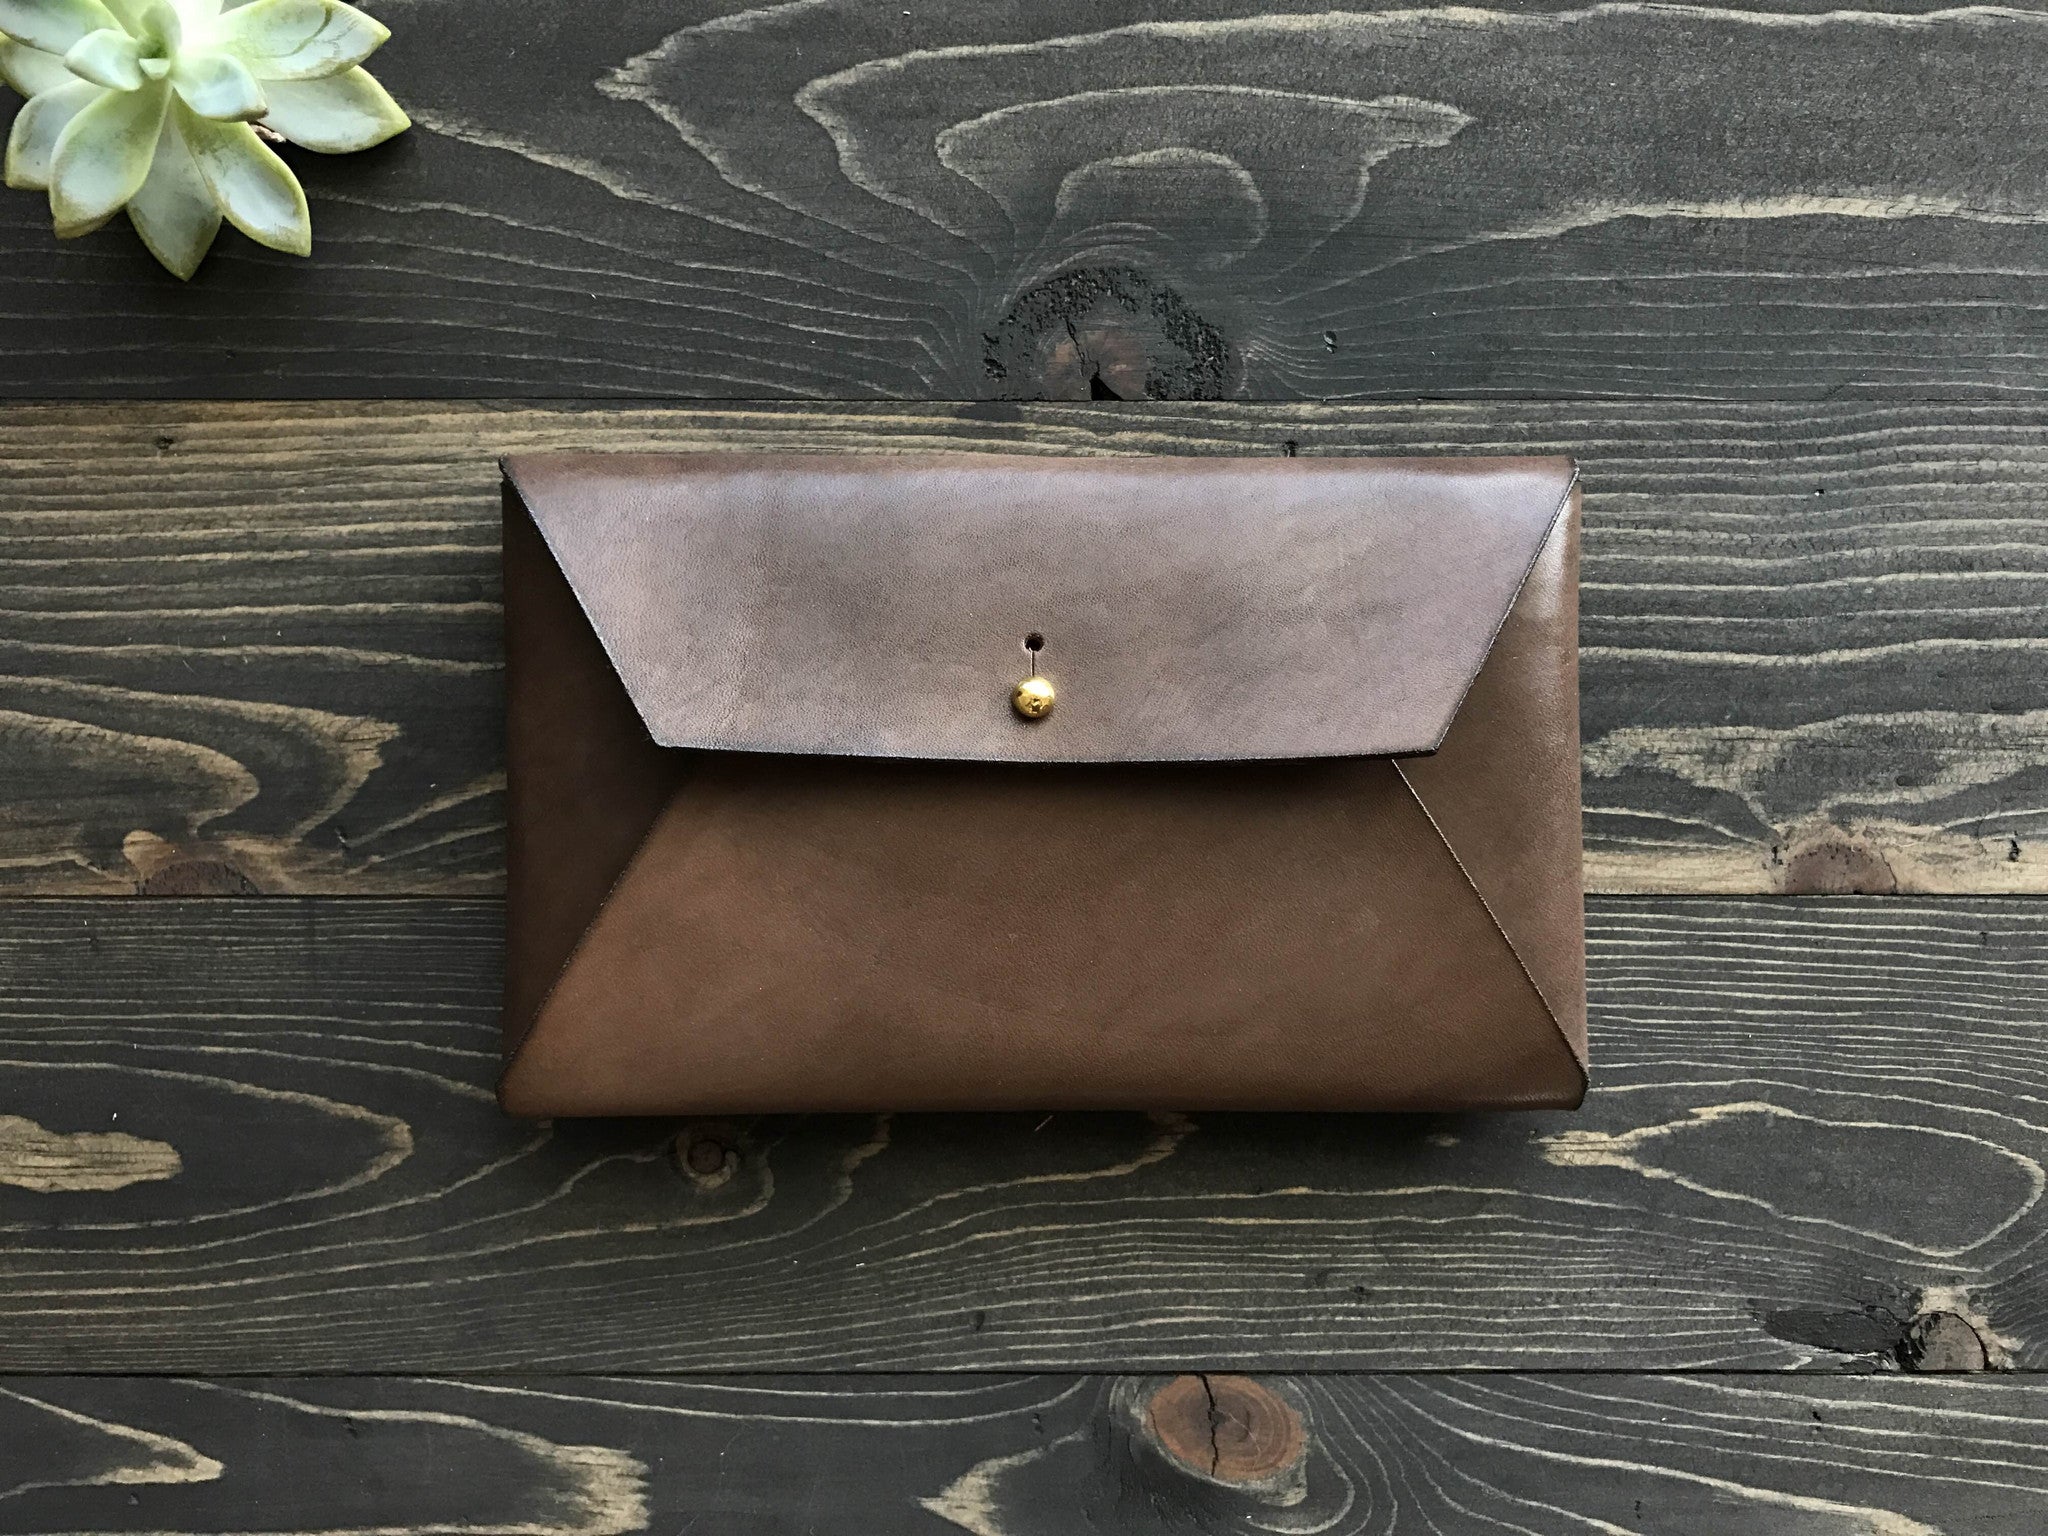 Leather Envelope Clutch - Tan